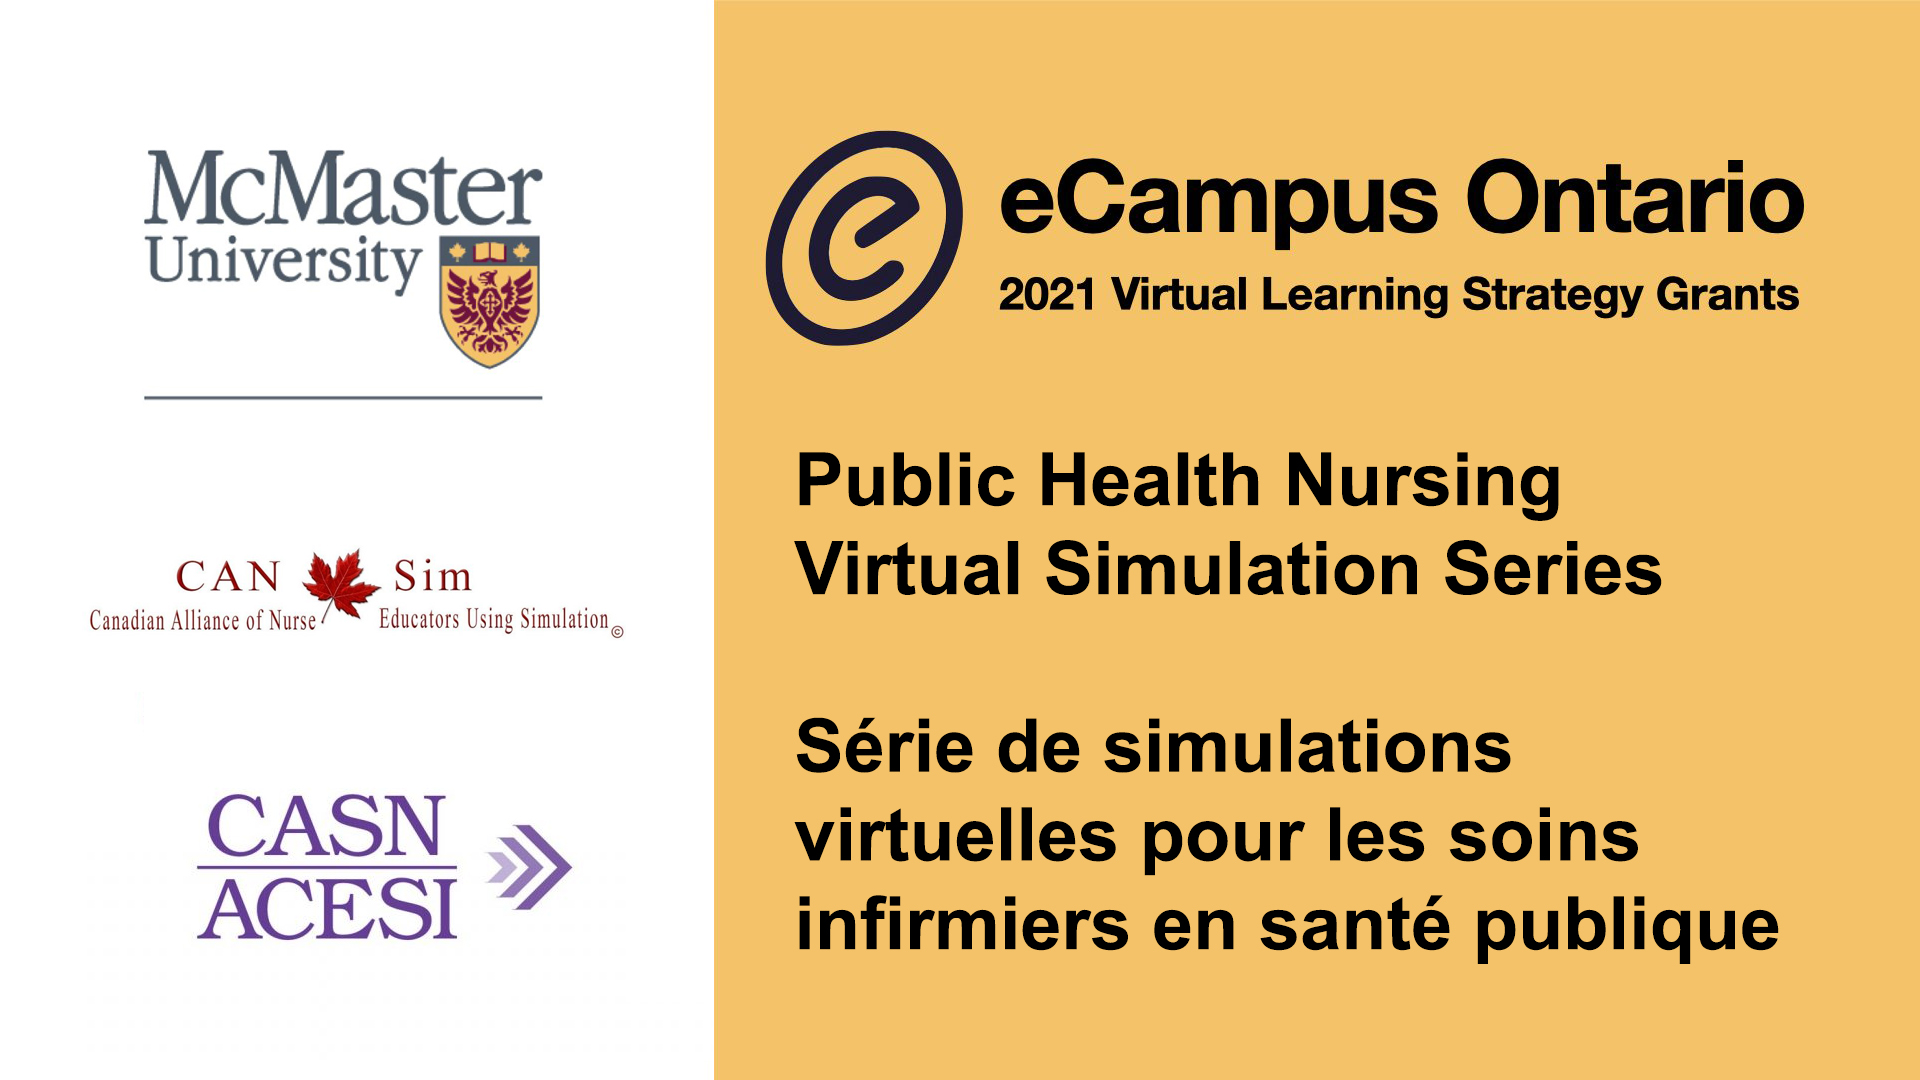 eCampus Ontario Funds the Creation of a Public Health Nursing Virtual Simulation Series